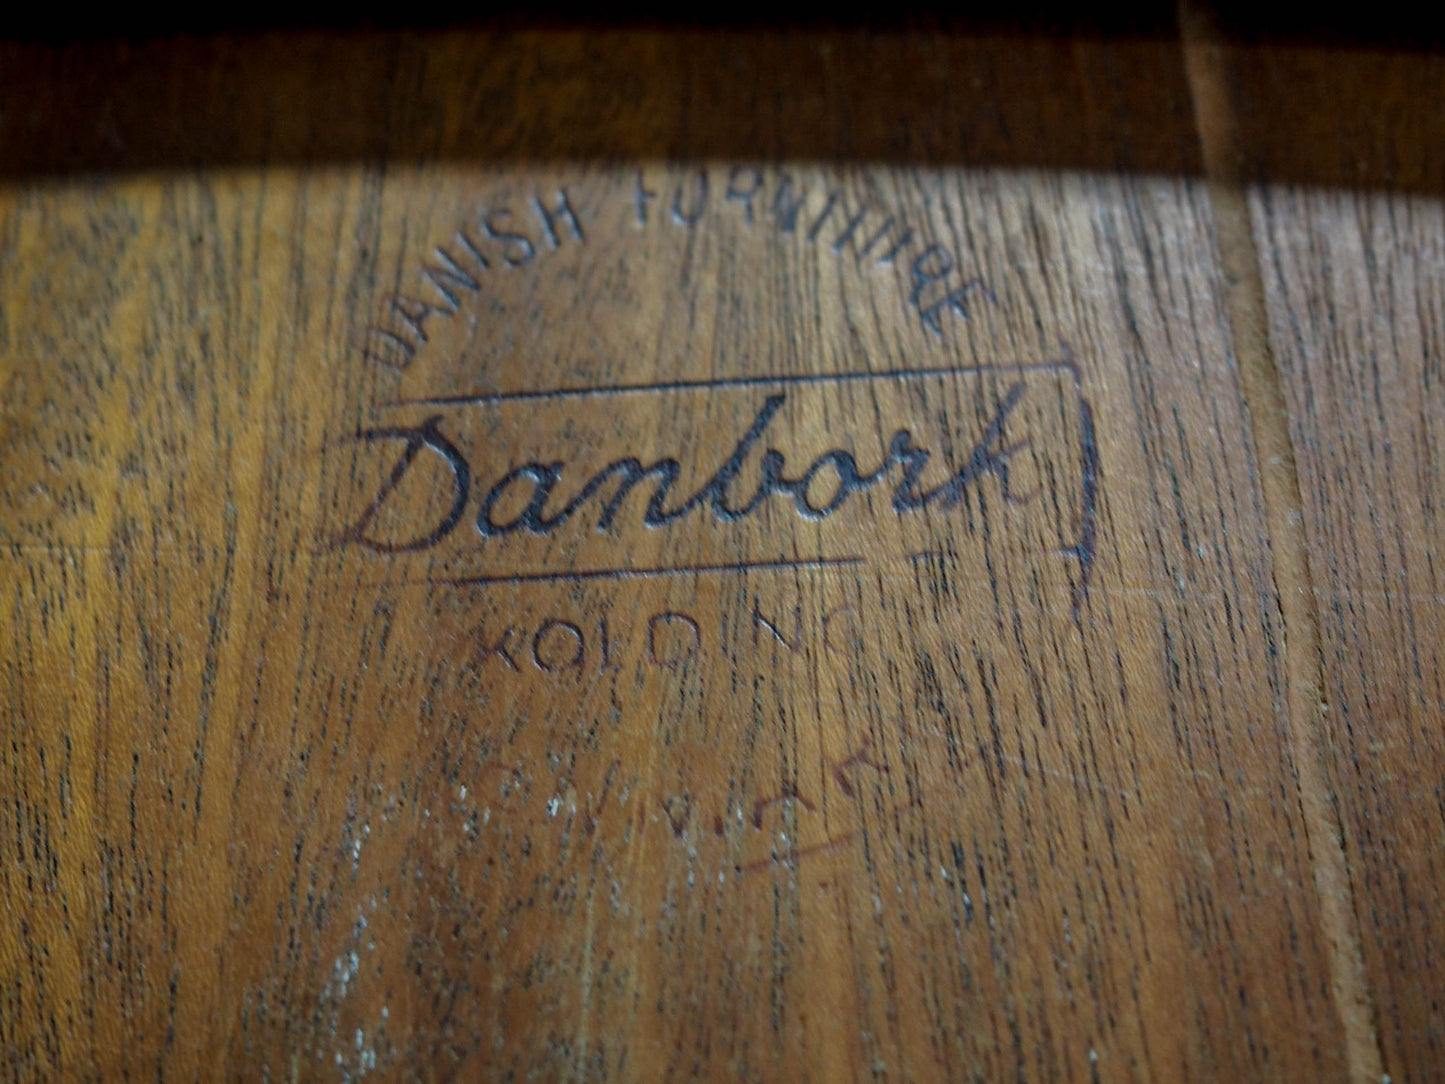 Danbork Danish Stackable Chairs 4 Set